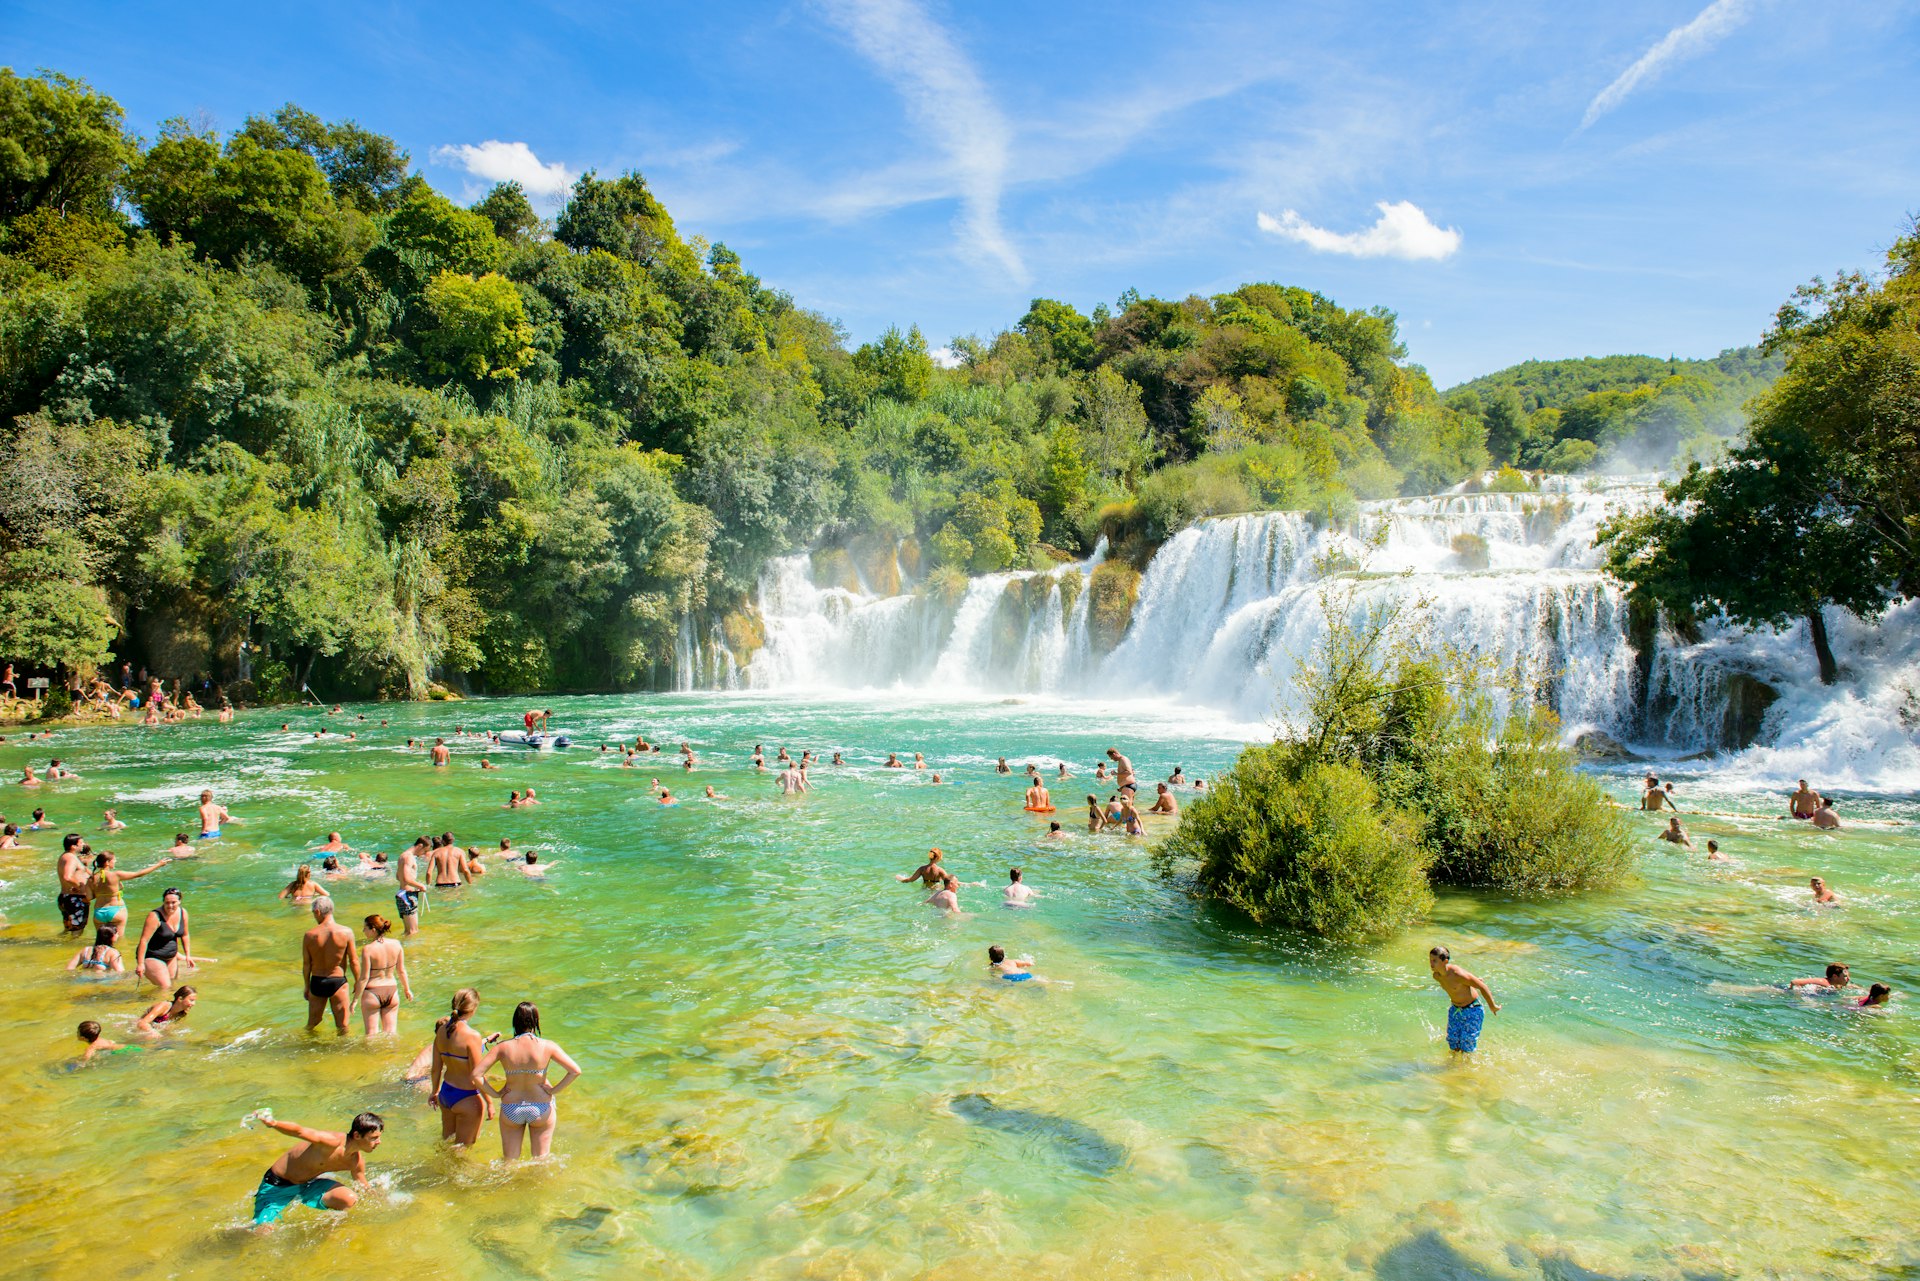 Tourists swim in the Krka River in the Krka National Park, Croatia